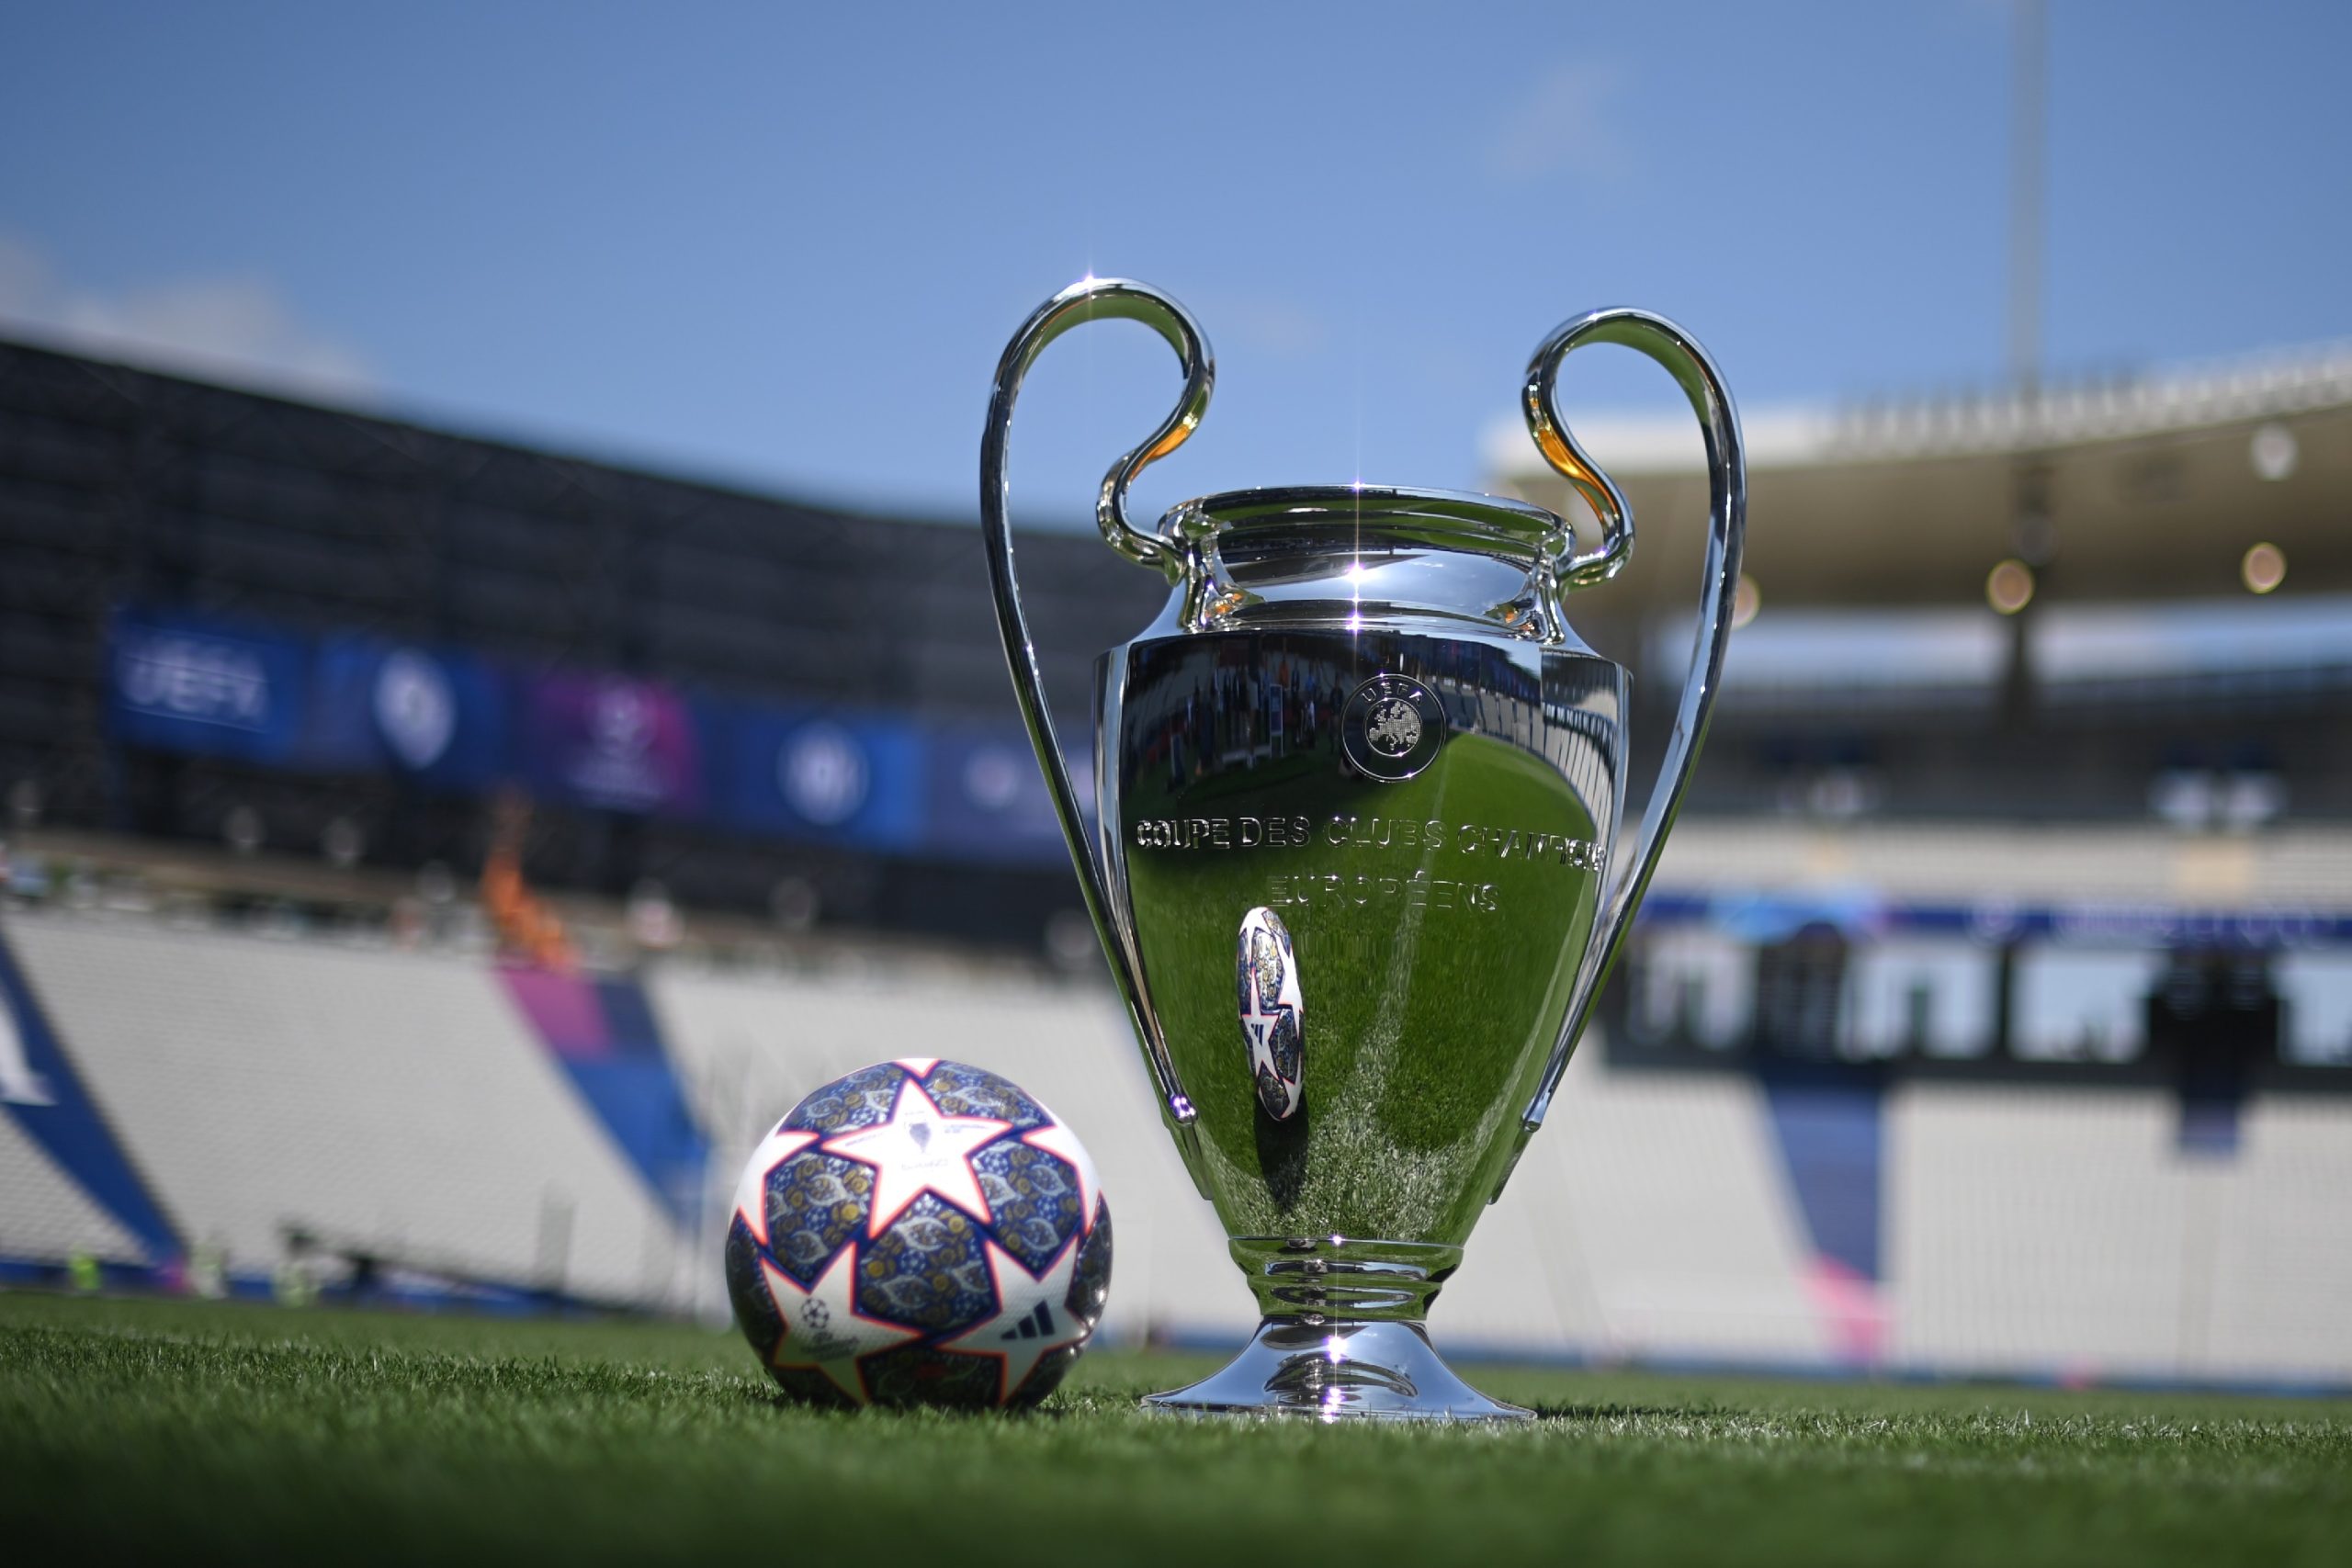 Kép: Michael Regan - UEFA/UEFA via Getty Images